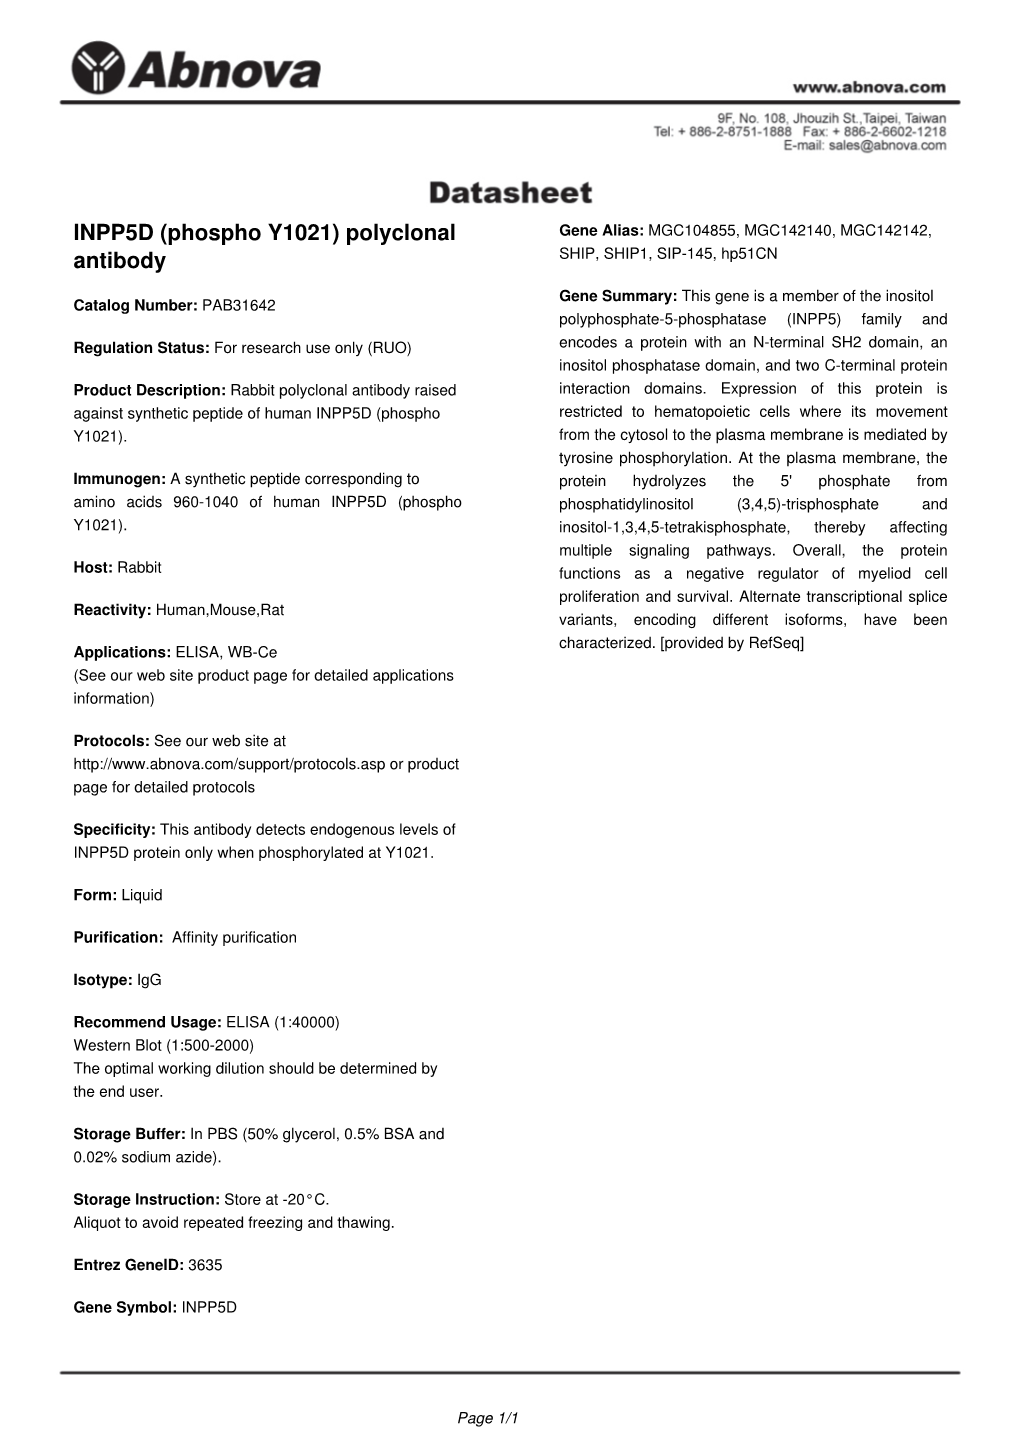 INPP5D (Phospho Y1021) Polyclonal Antibody